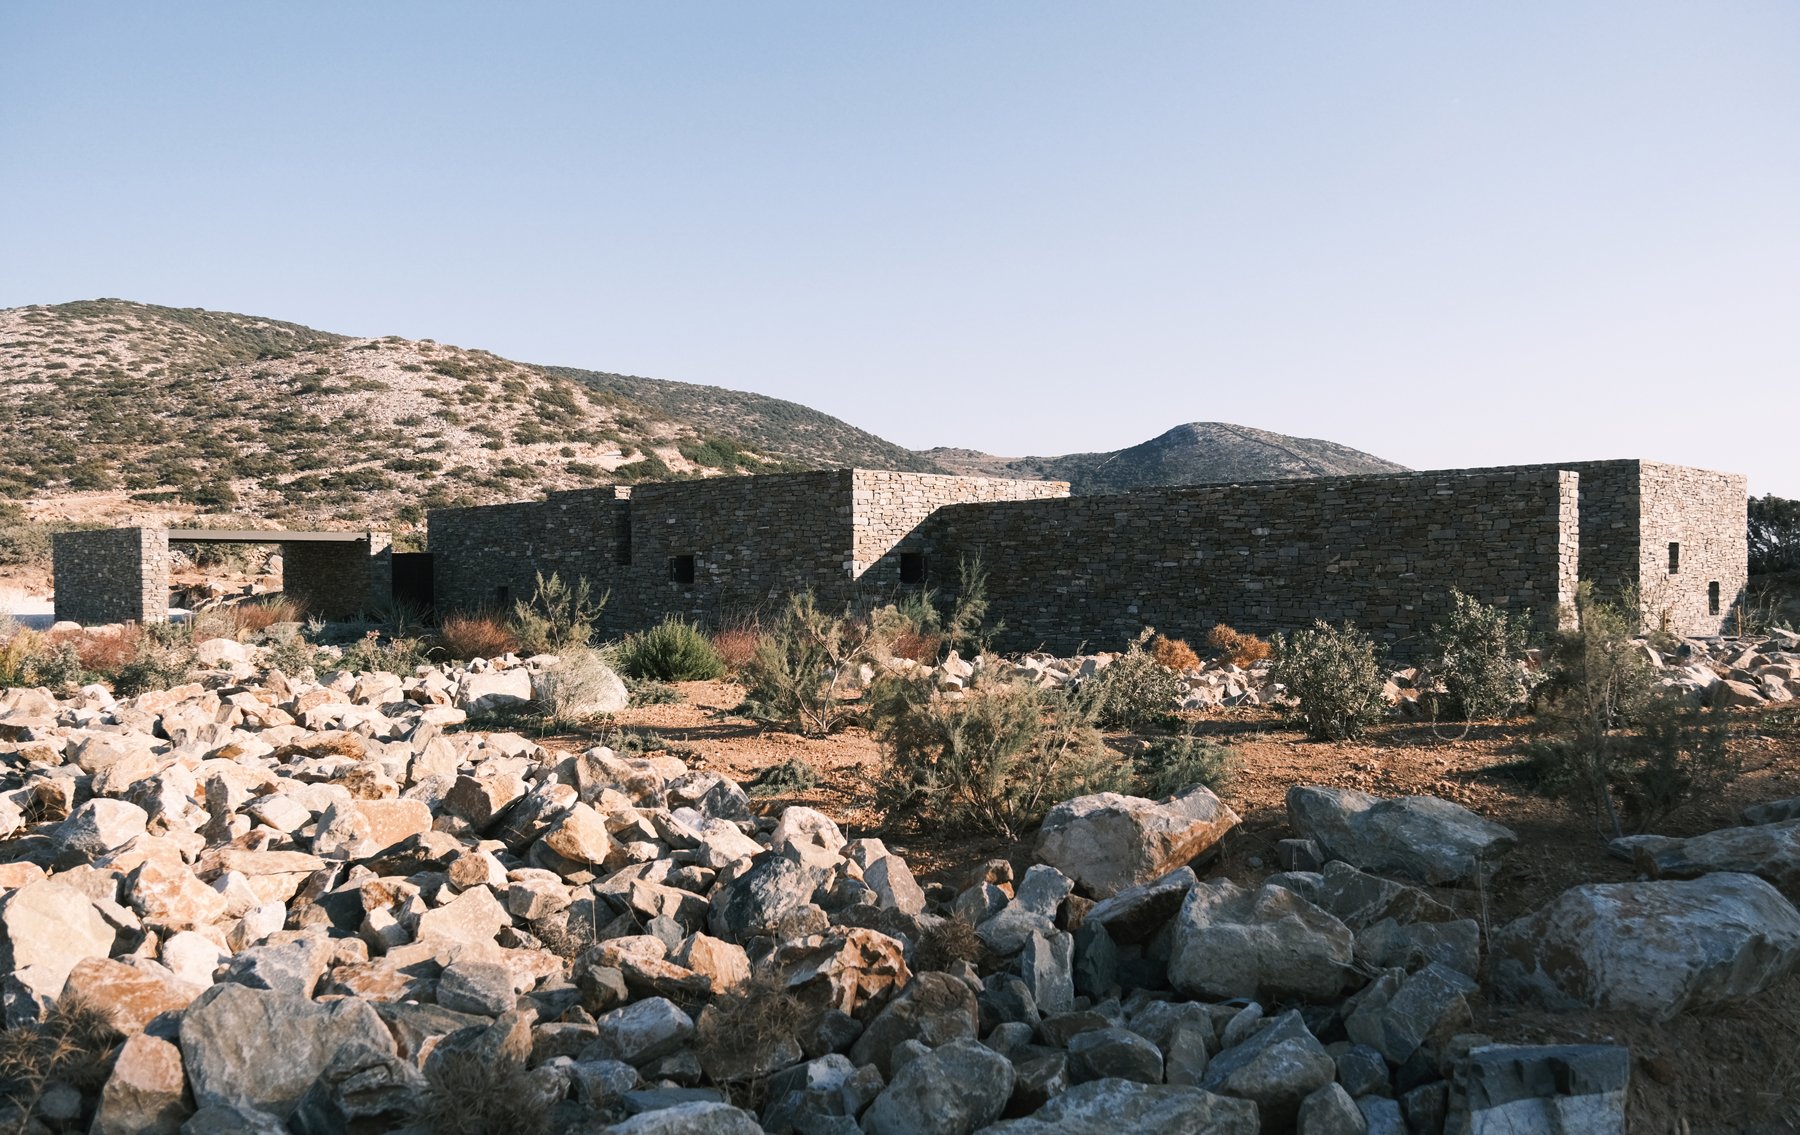  House in Angairia, Paros,  Lab Athens  in collaboration with Diederik Van Rengen 